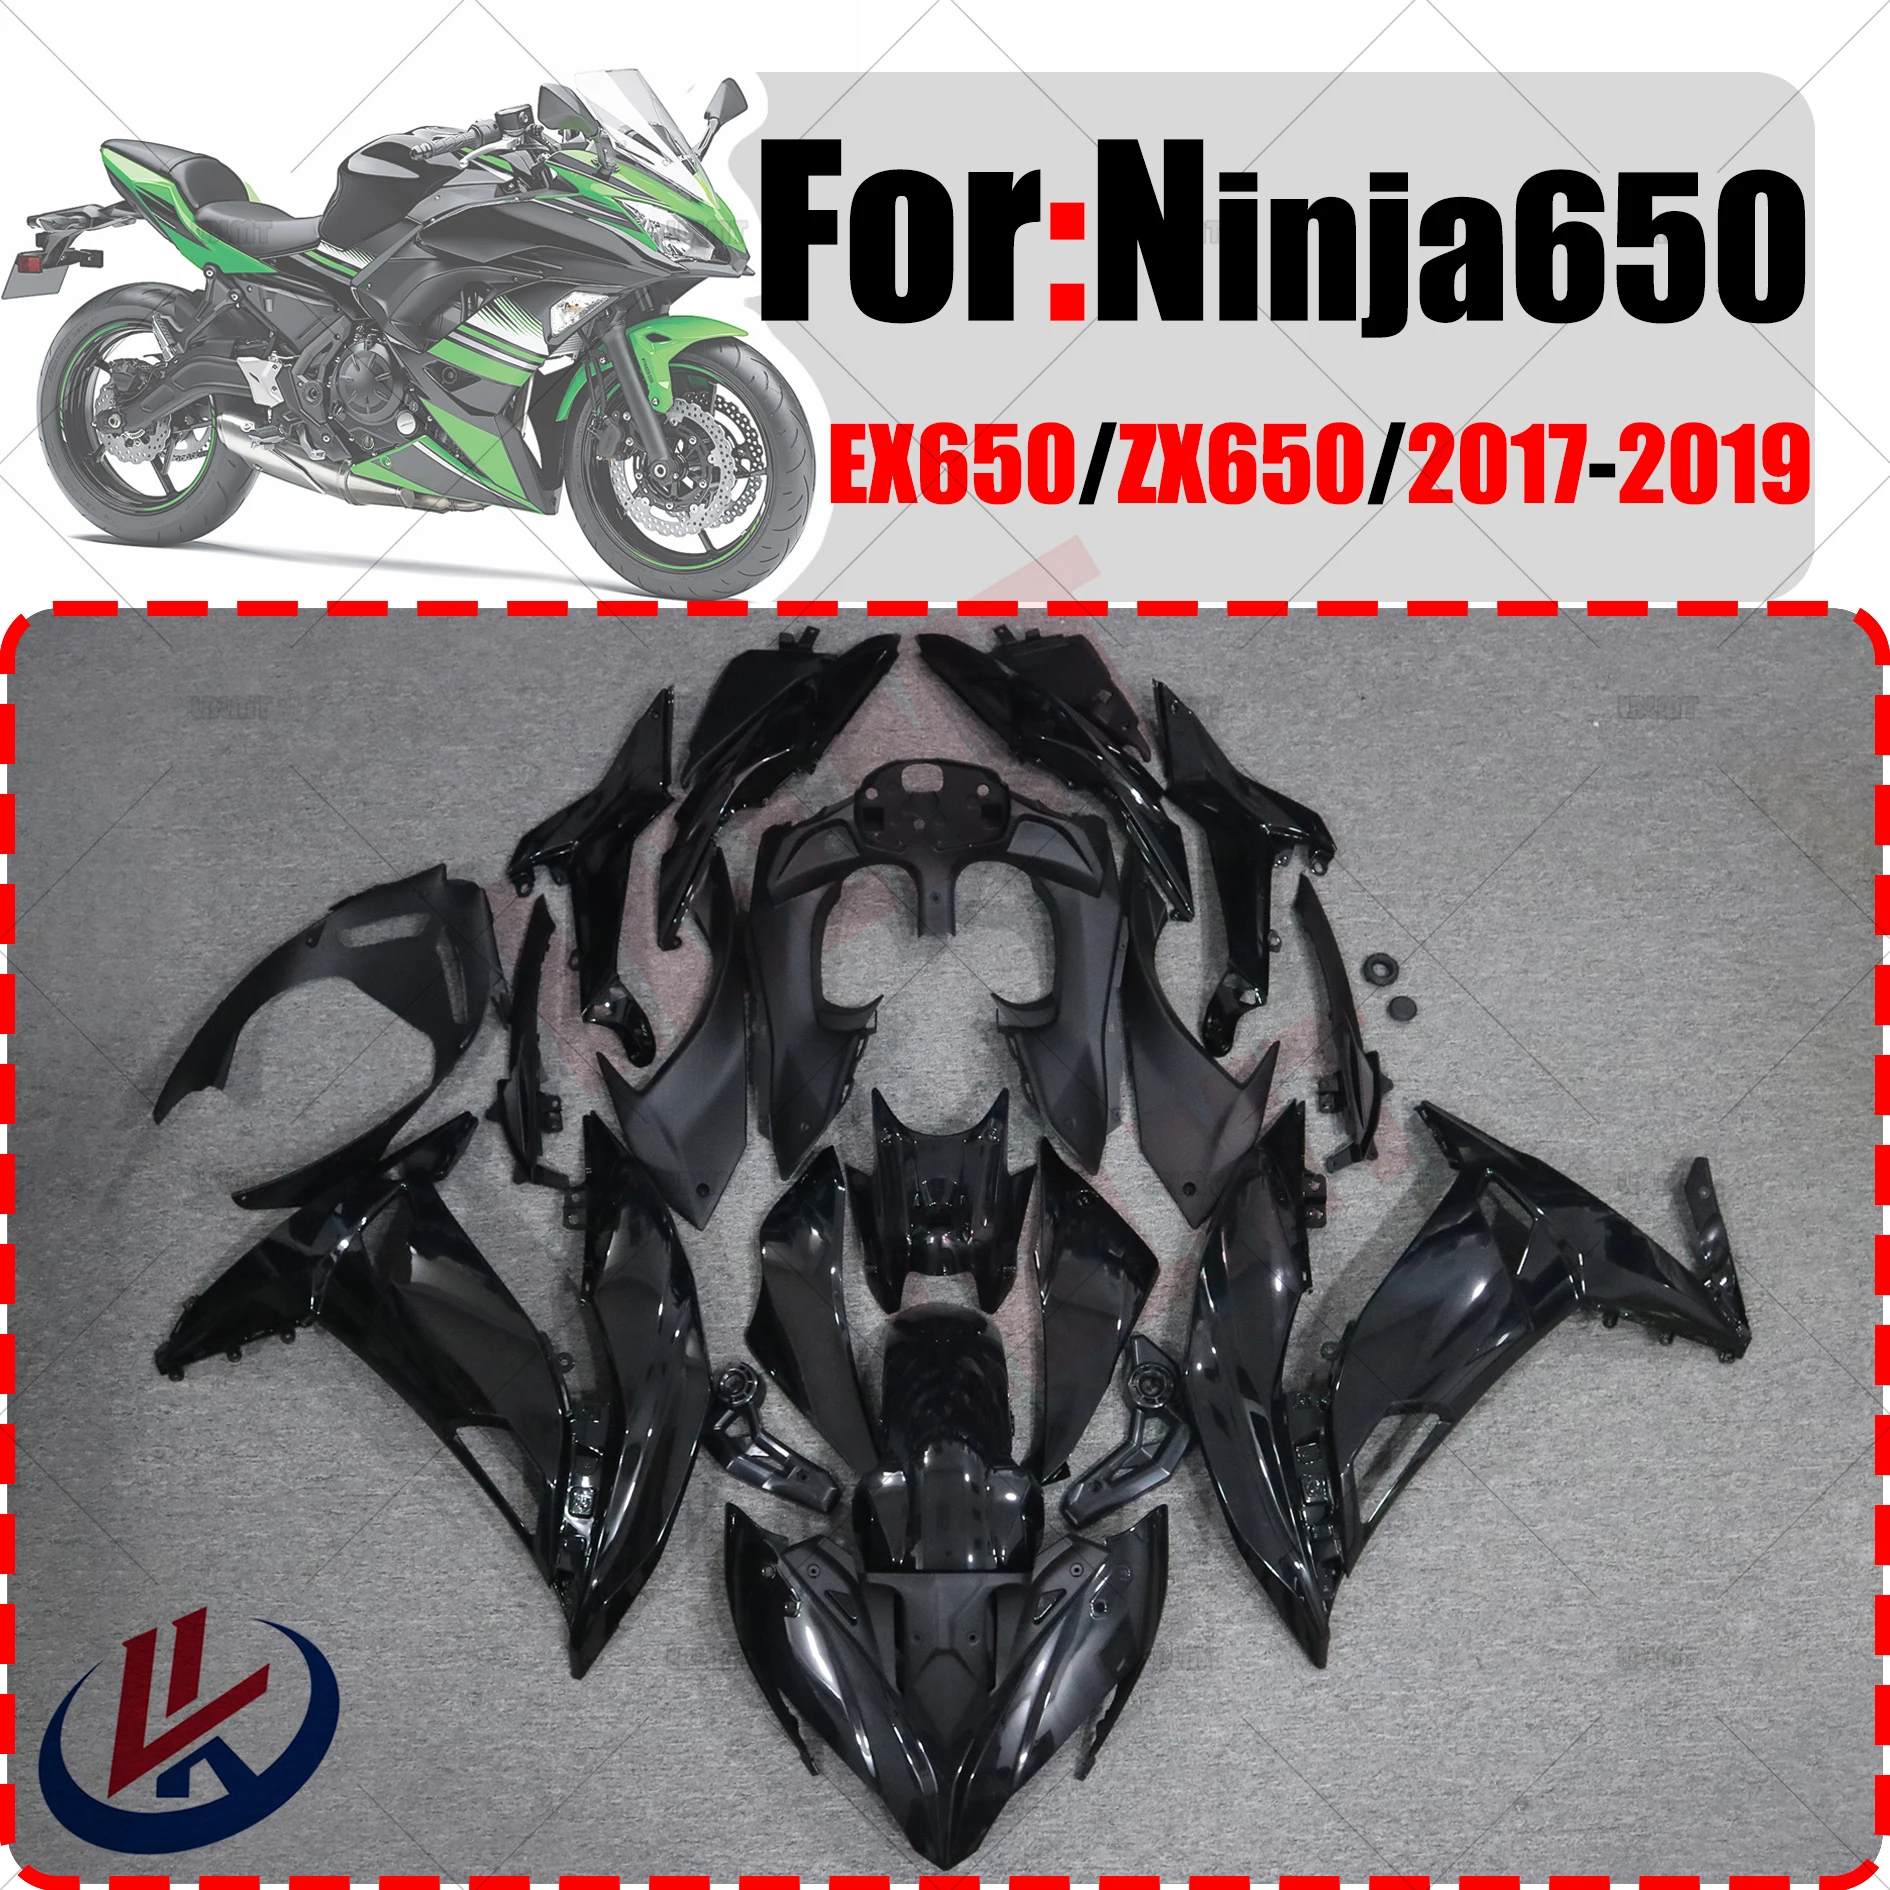 

For Kawasaki ZX650 EX650 ER6F Ninja650 2017 2018 2019 Motorcycle Fairings Injection Mold Painted ABS Plastic Bodywork Kit Sets